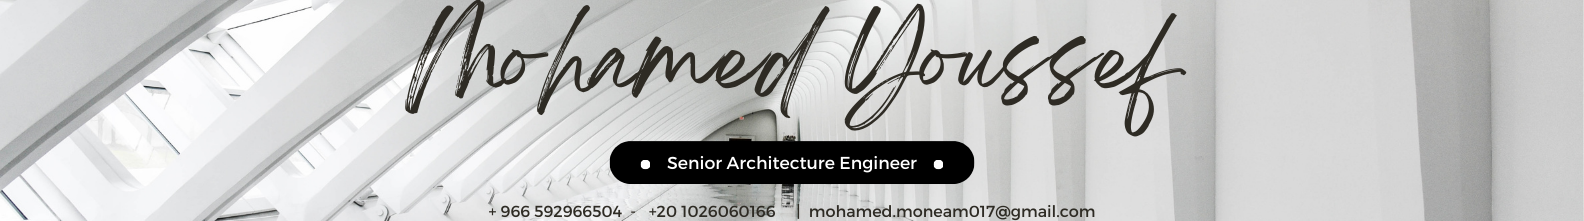 Mohamed Youssef's profile banner